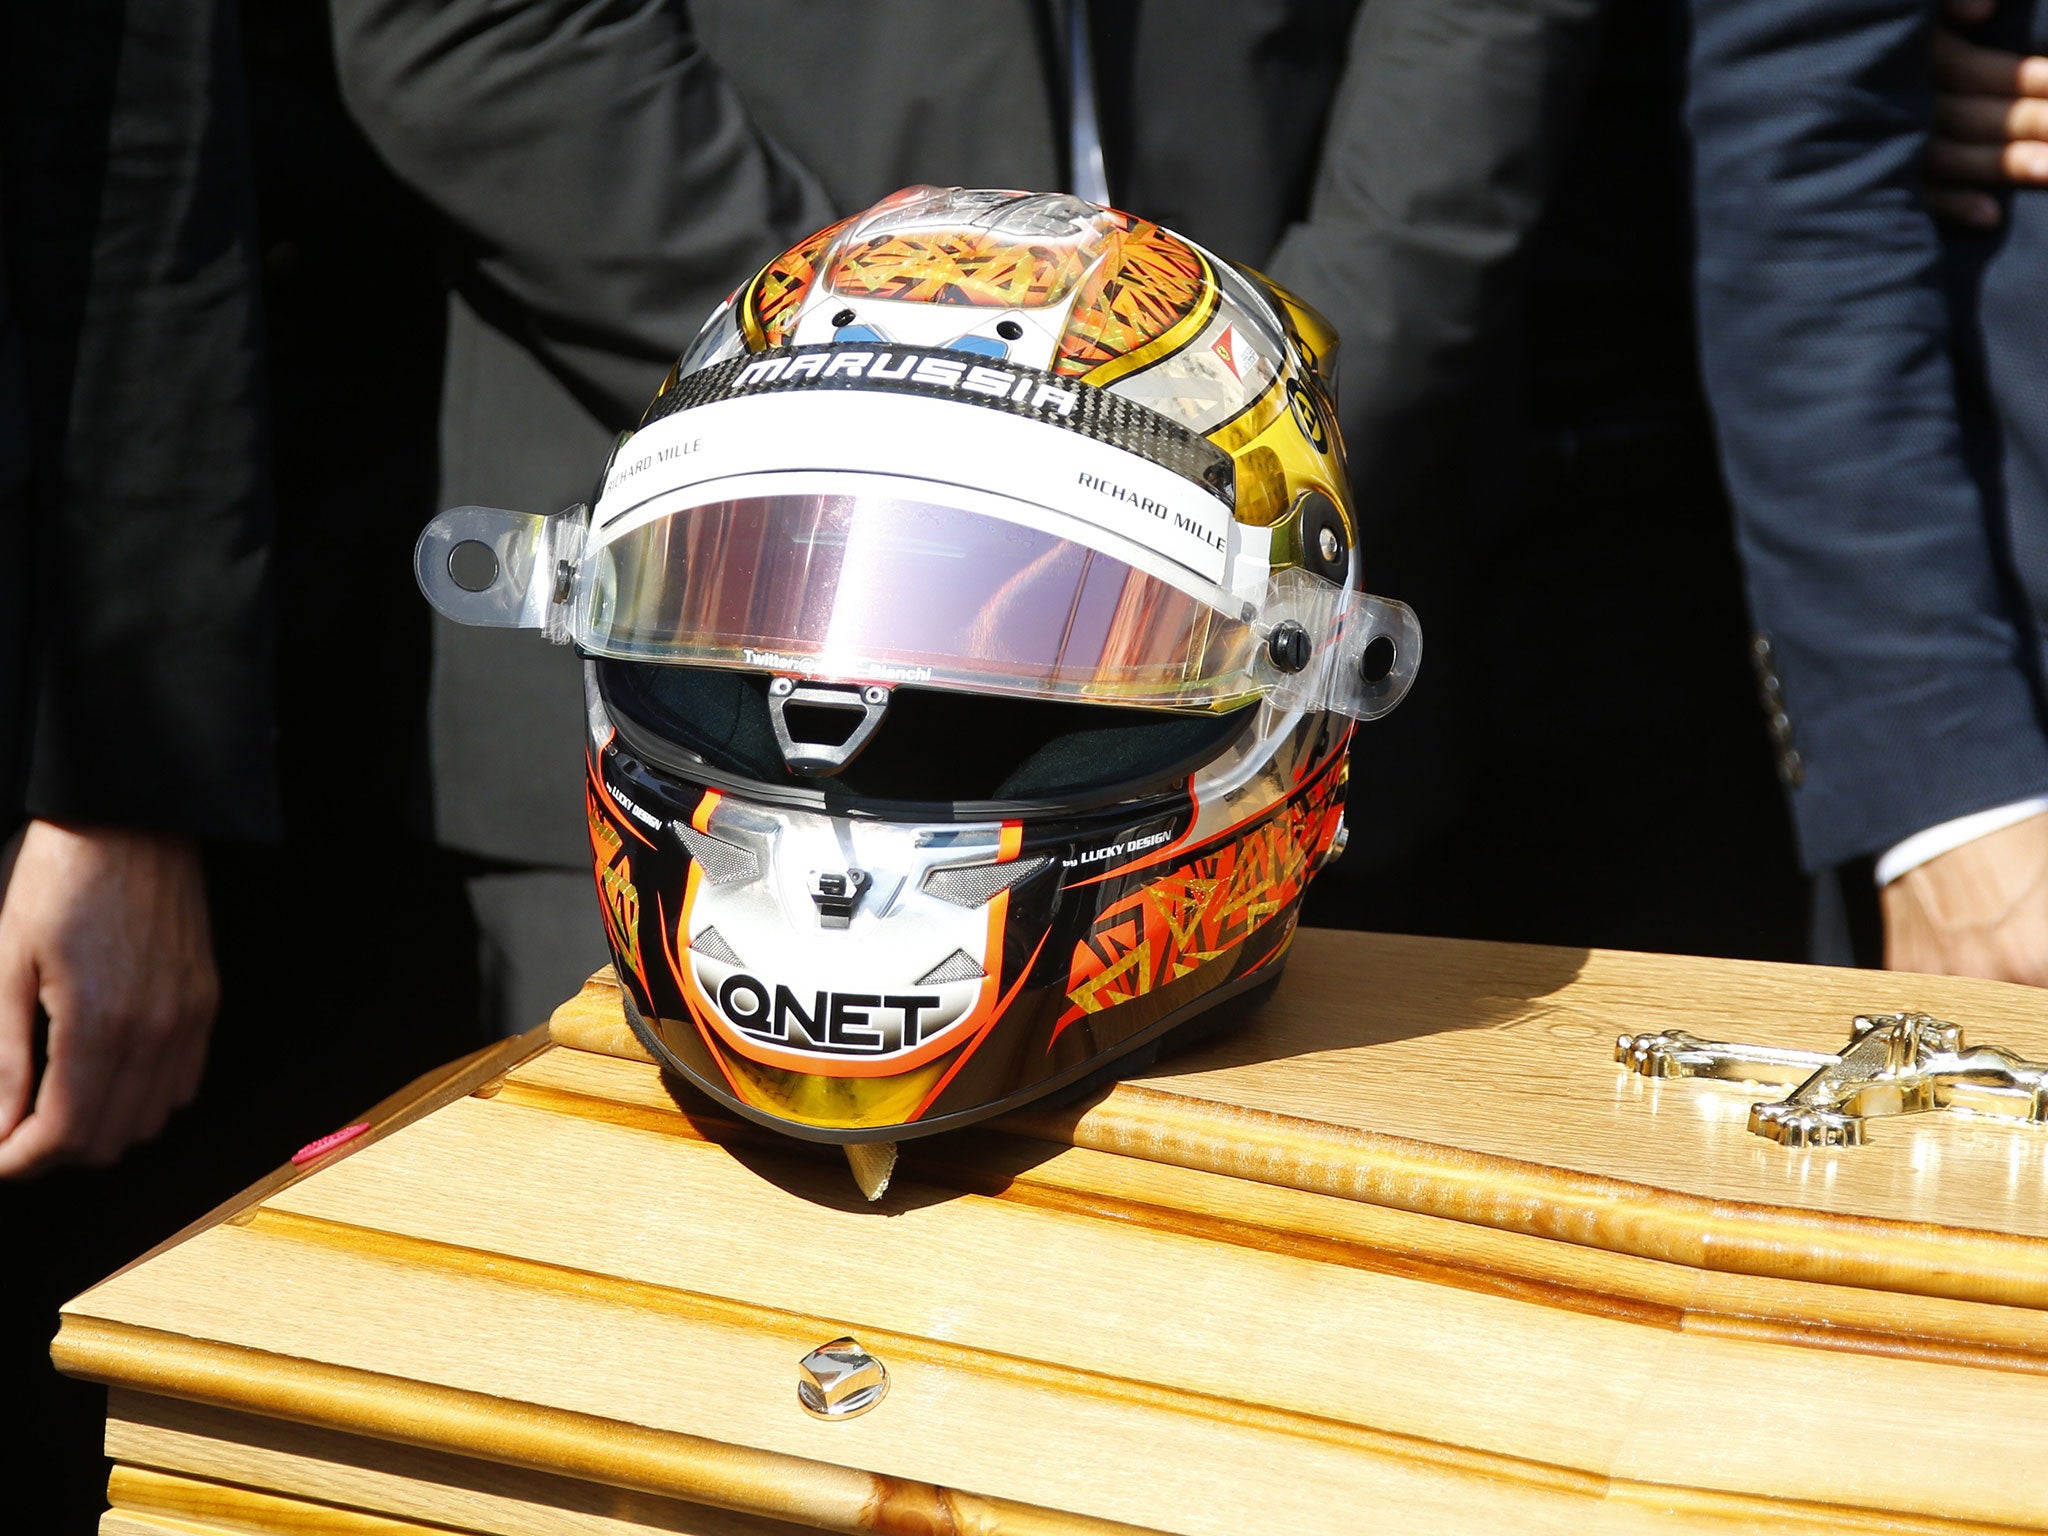 Jules Bianchi's helmet atop the driver's casket